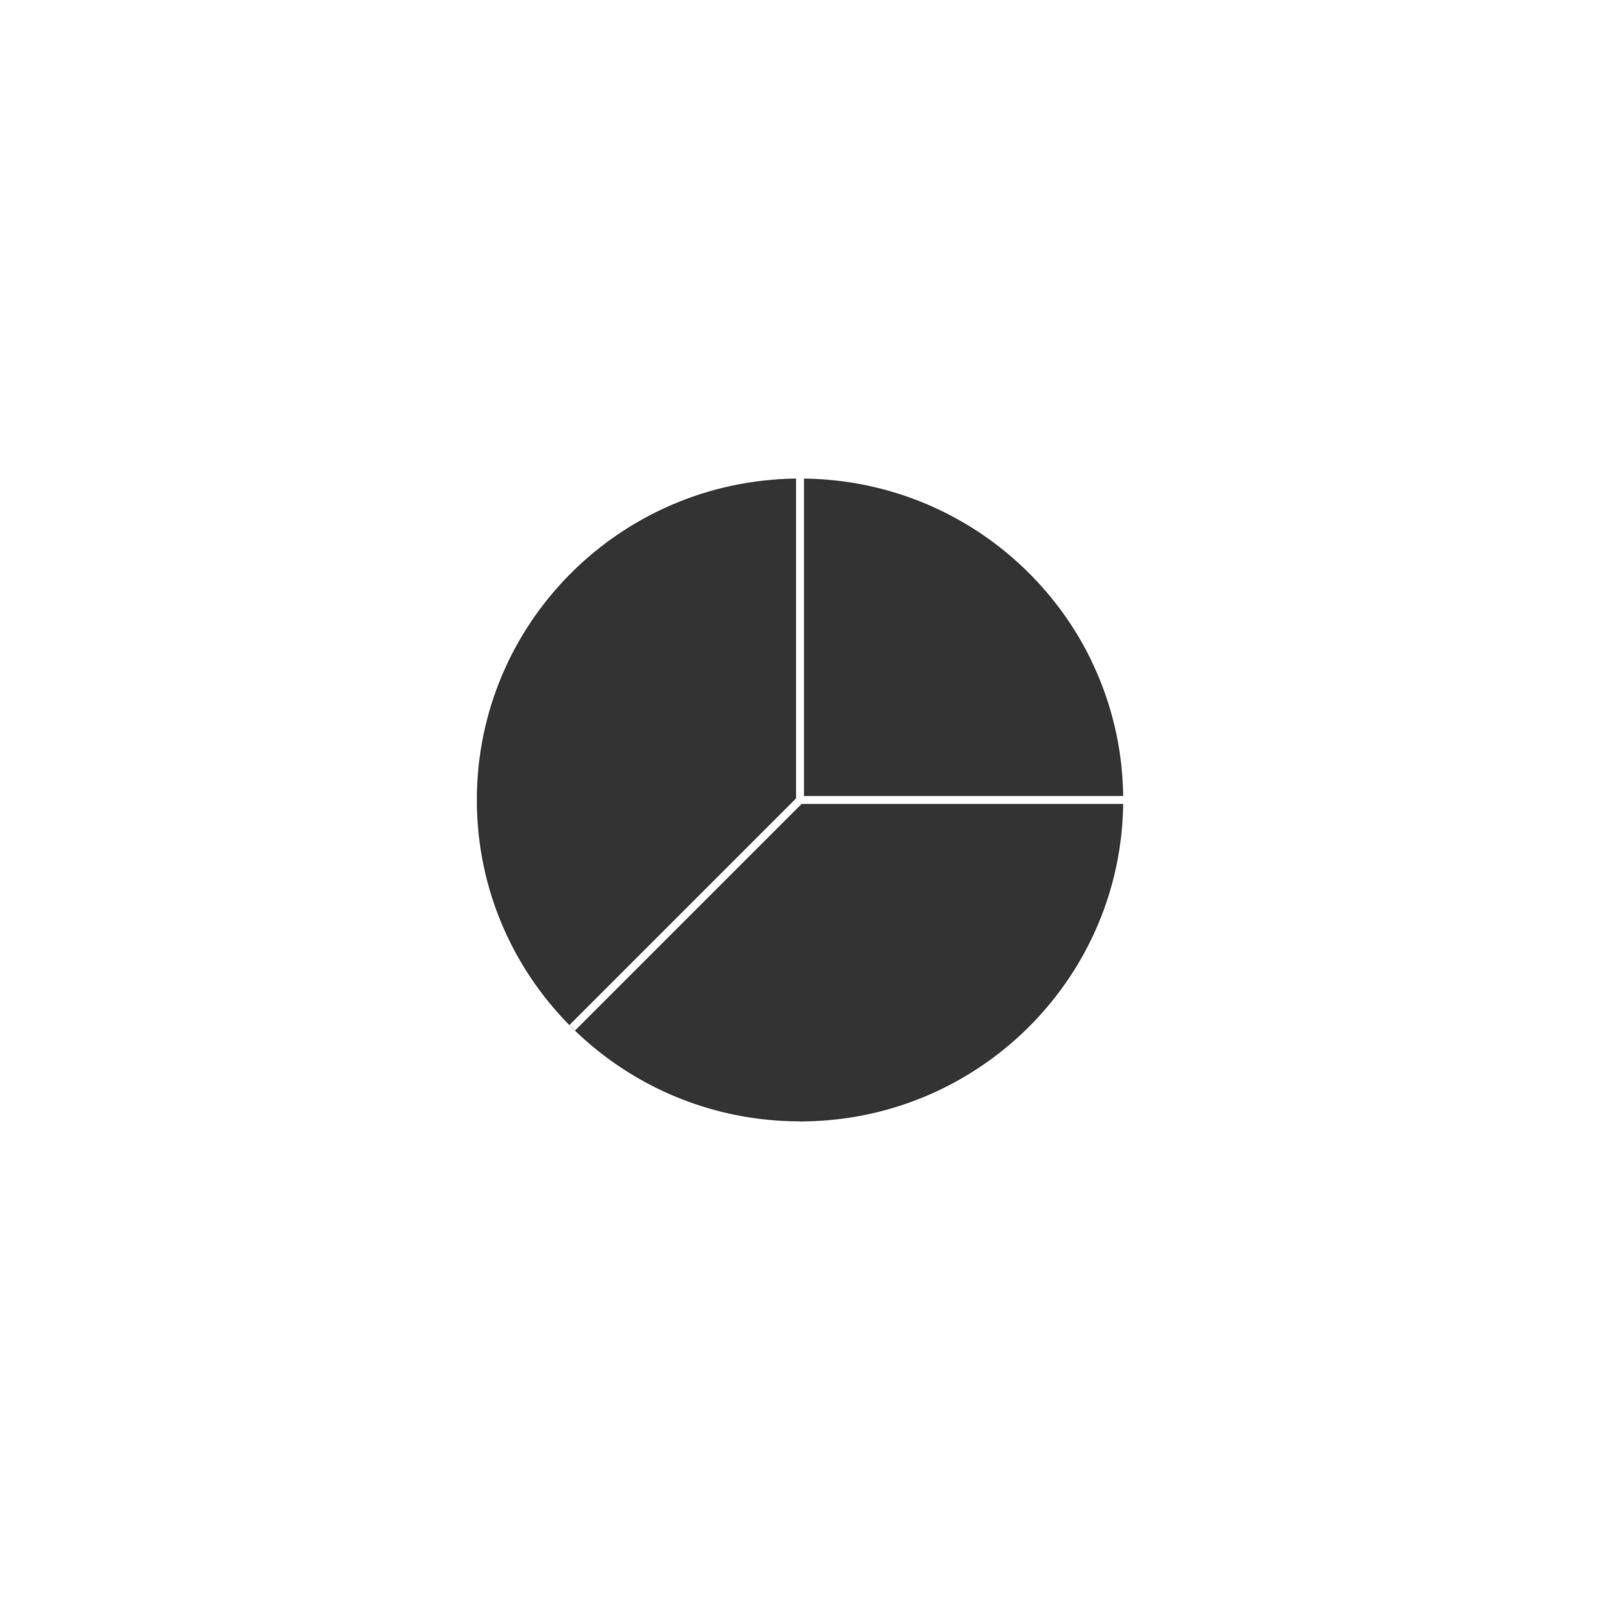 Circular chart, diagram, pie chart icon. Vector illustration, flat design. by Vertyb